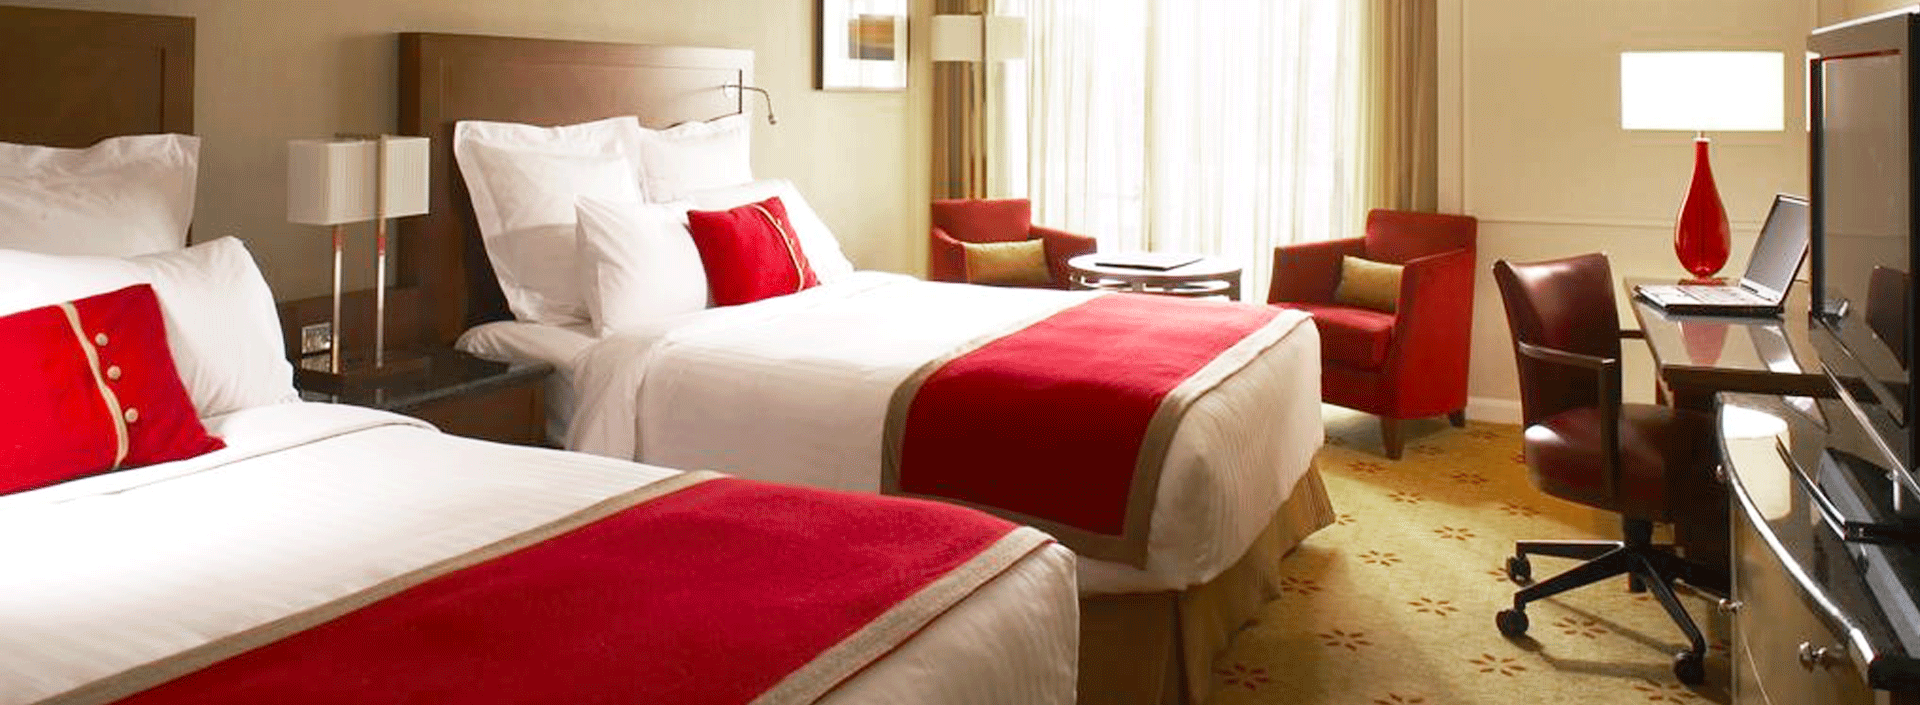 01-London-Marriott-Hotel-Regents-Park-hotelsforday